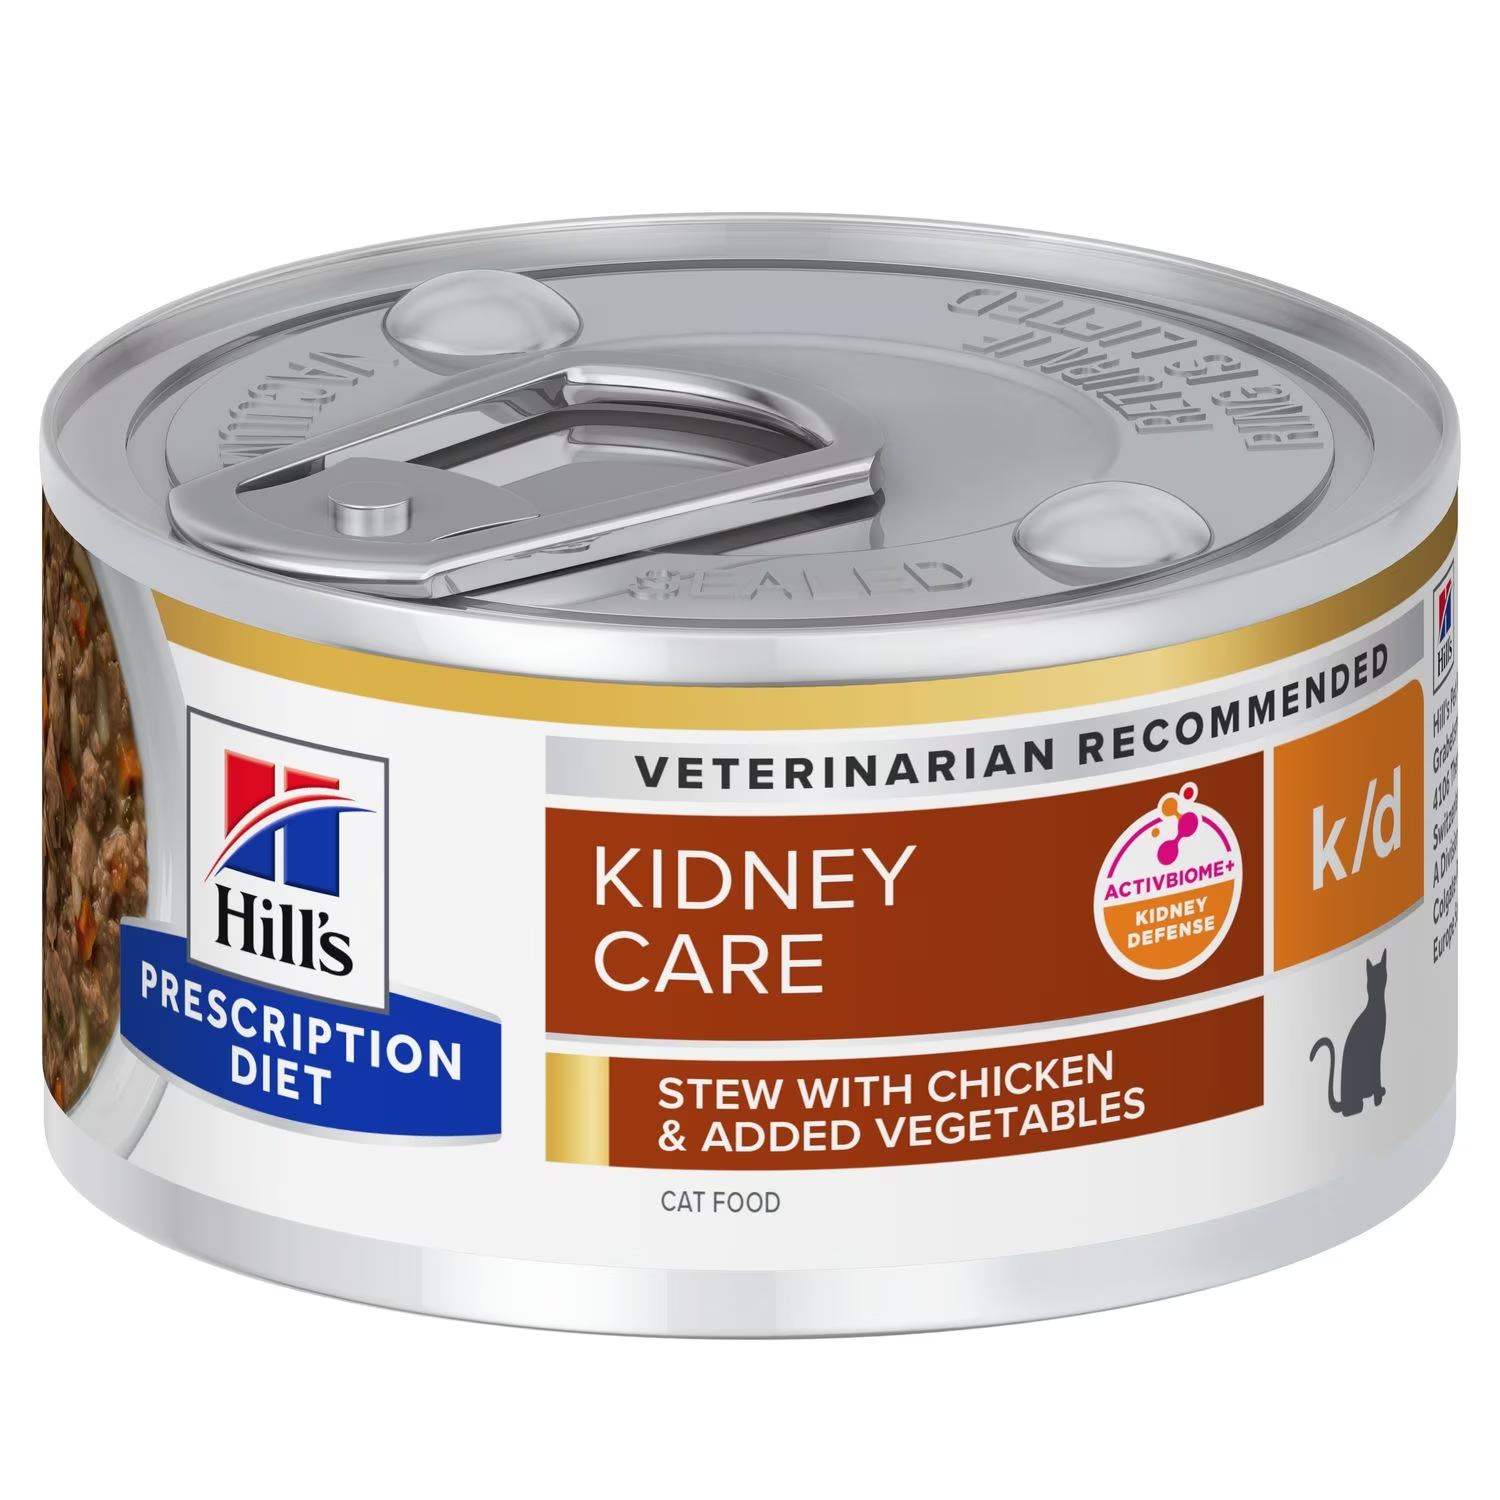 Hill's Prescription Diet Feline k/d Kidney Care Chicken & Veg Stew 24 x 82g